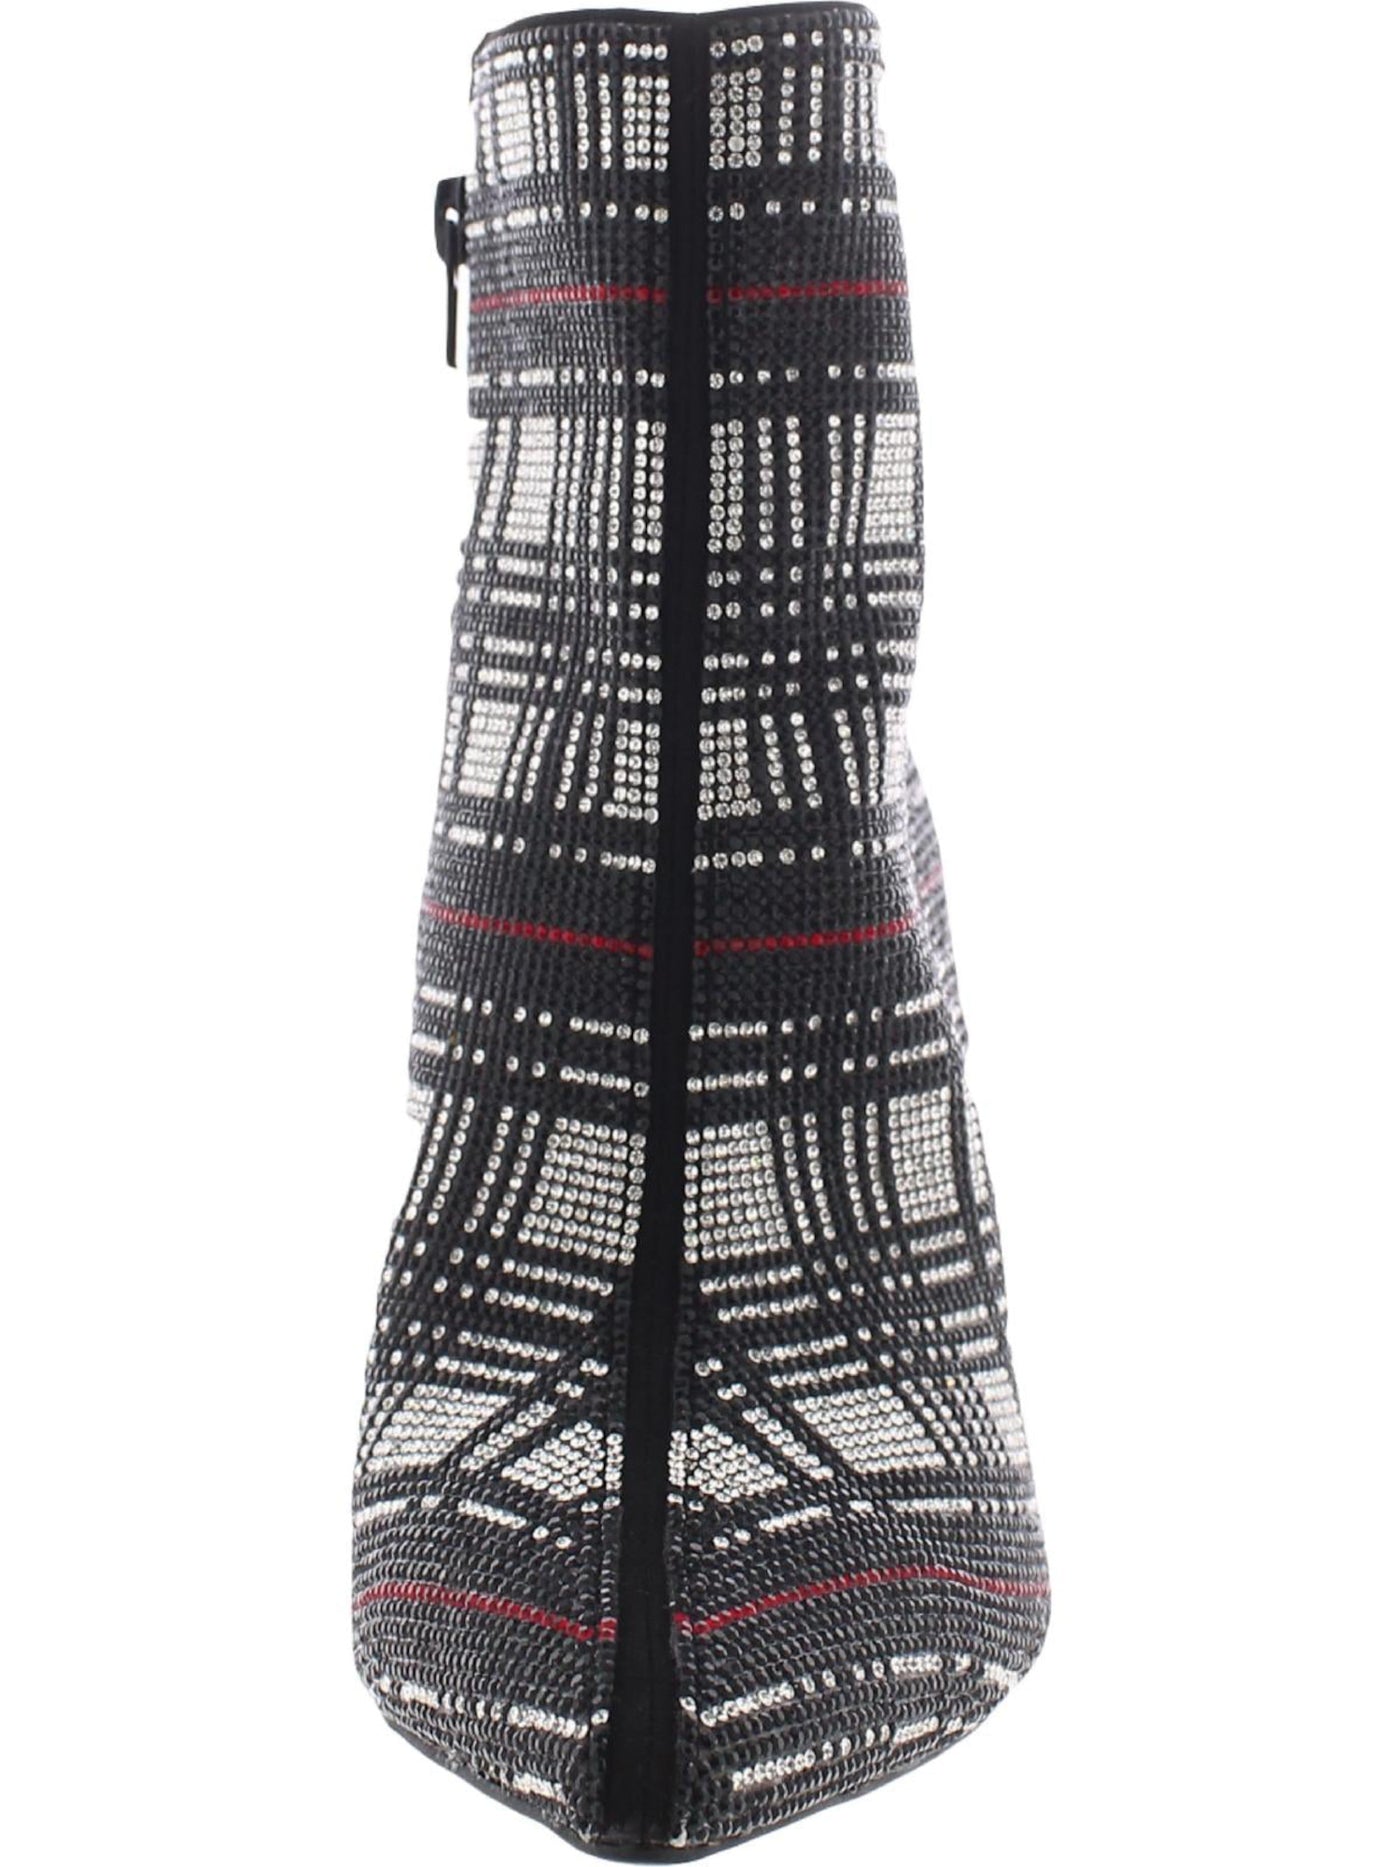 INC Womens Black Plaid Rhinestone Comfort Reisa Pointed Toe Stiletto Zip-Up Dress Booties 5.5 M